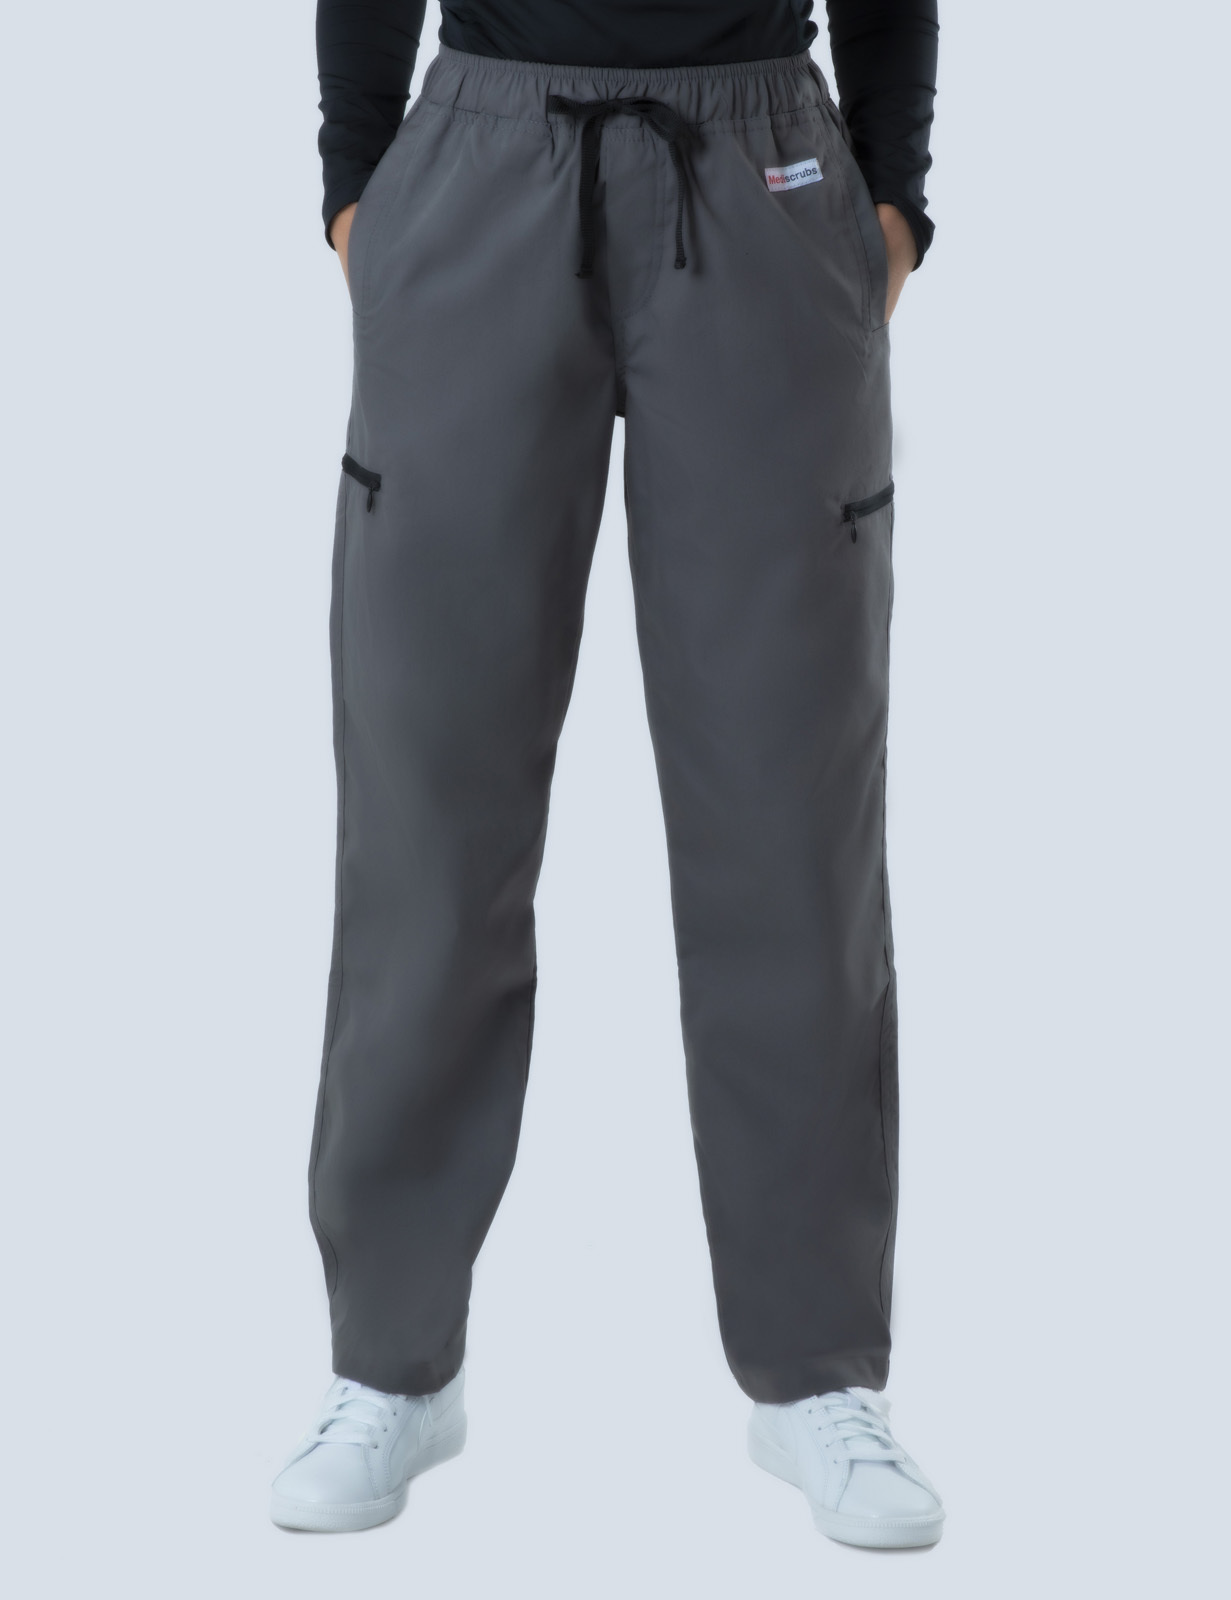 Women's Utility Pants - Steel Grey - Large - Tall